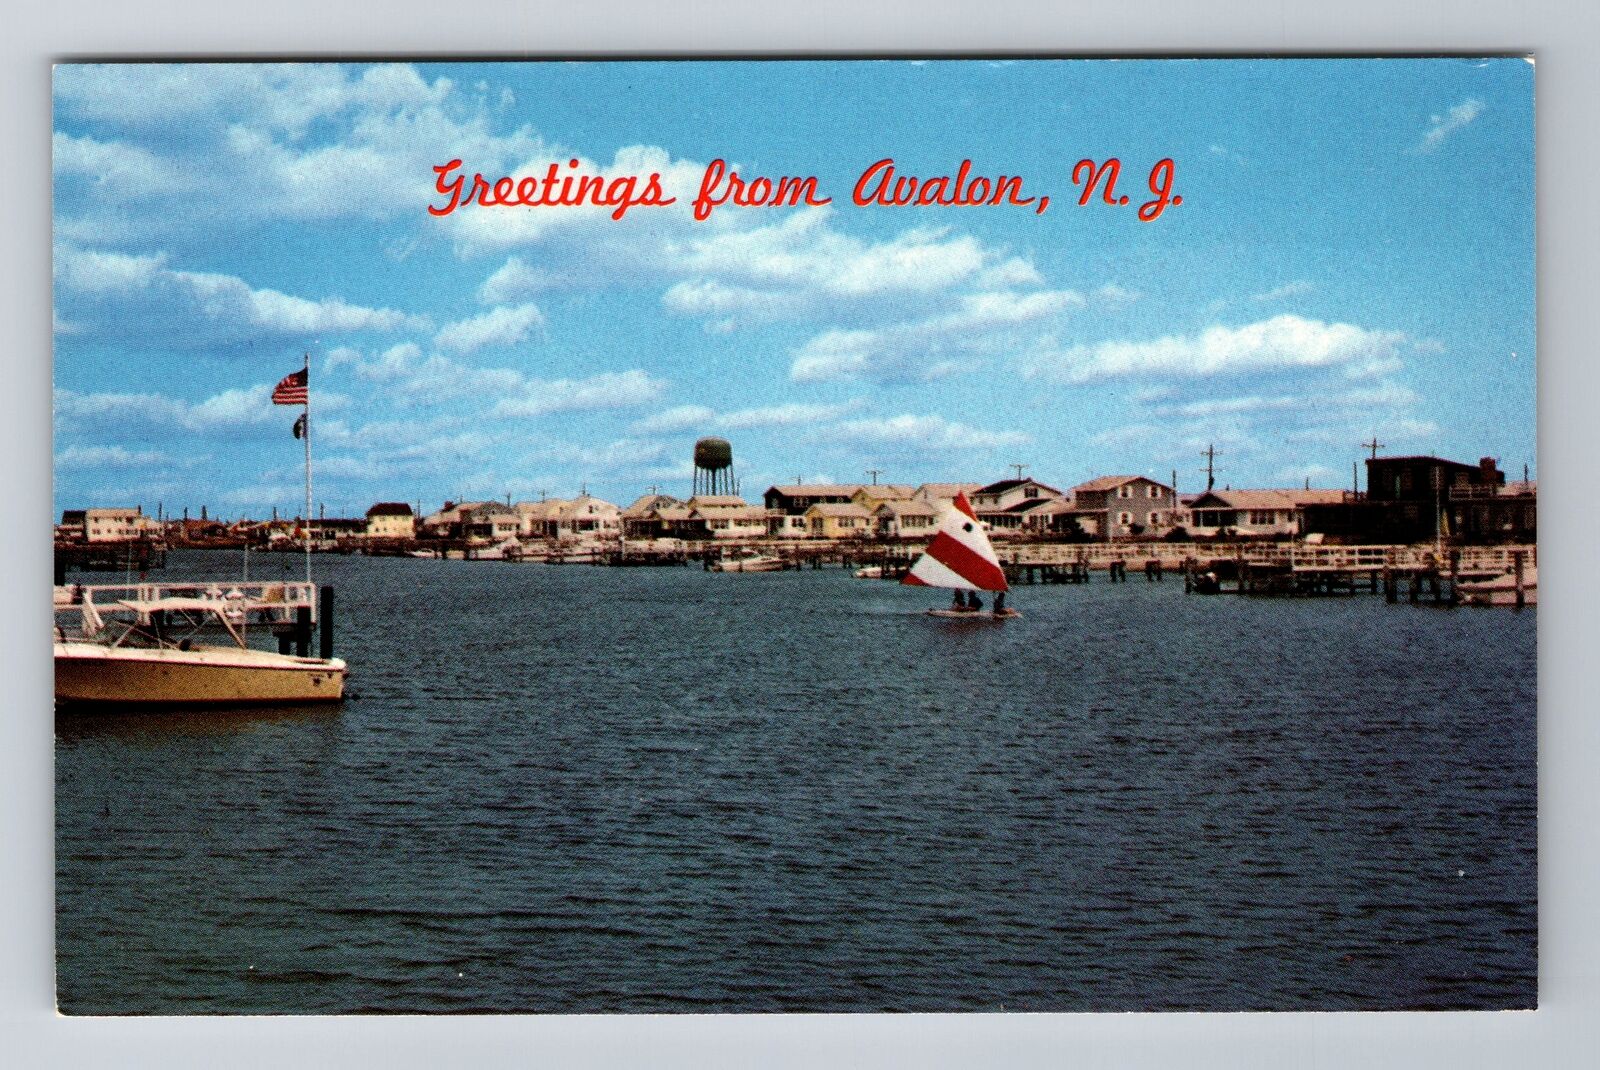 Avalon NJ-New Jersey, General Greeting, Boats on Lagoon, Vintage Postcard